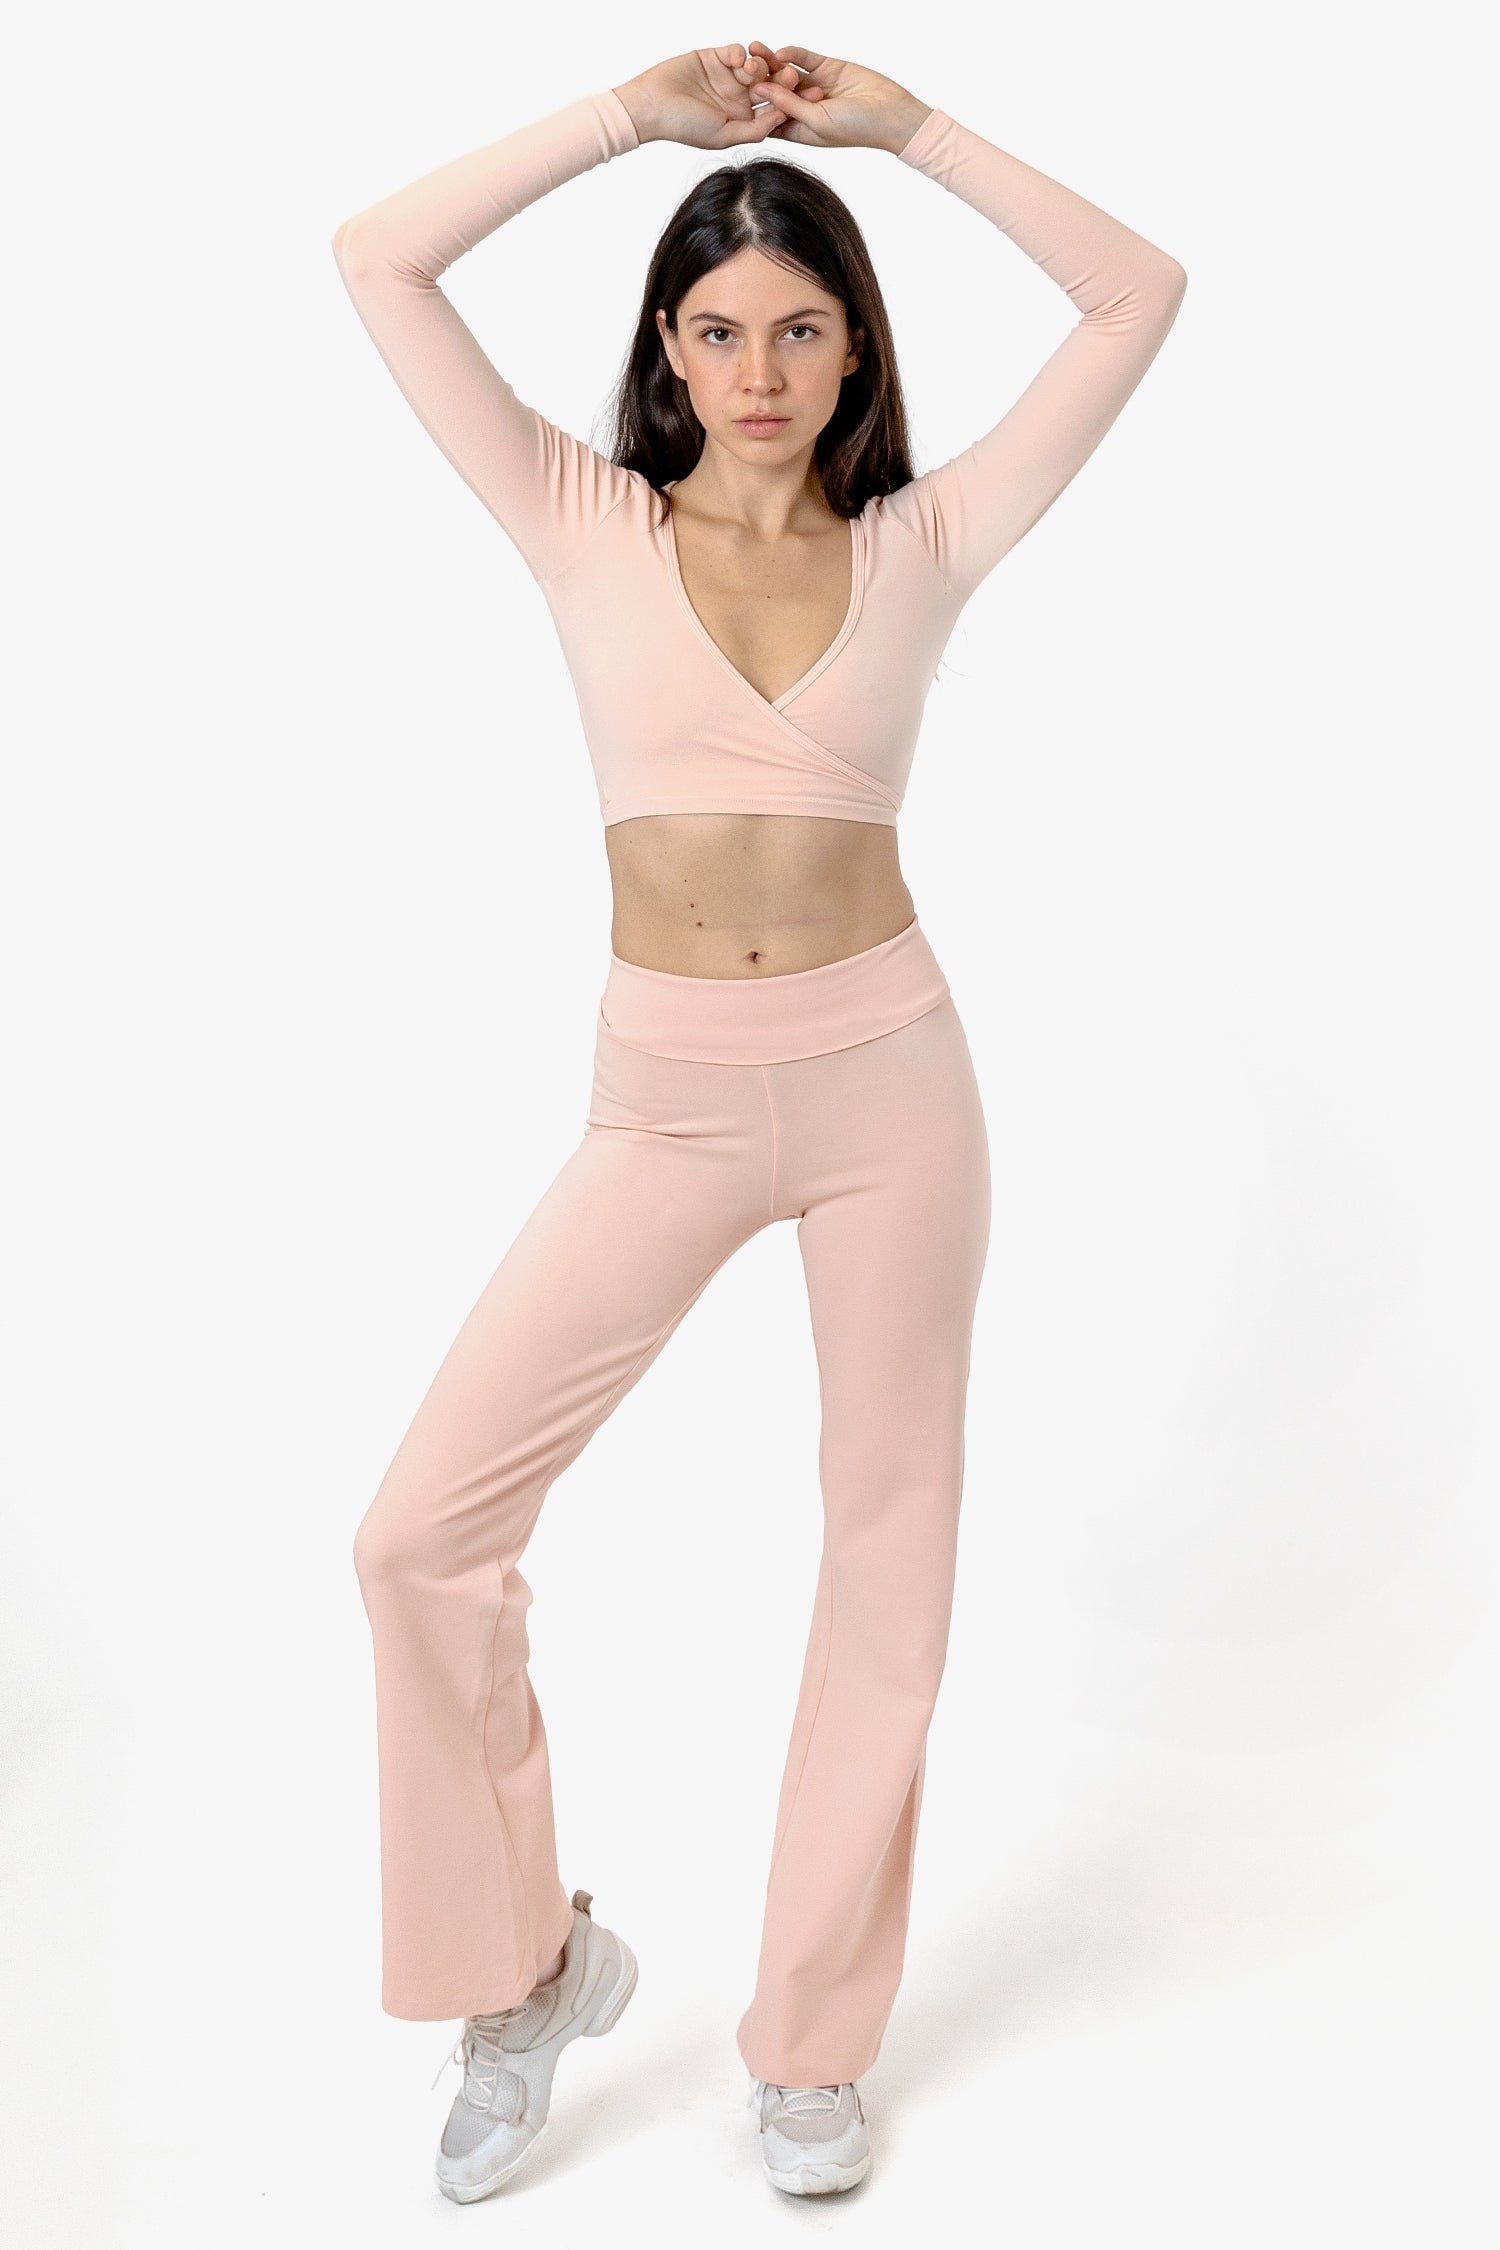 Los Angeles Apparel | Garment Dye Long Sleeve Wrap Top for Women in Strawberry Pink, Size Medium